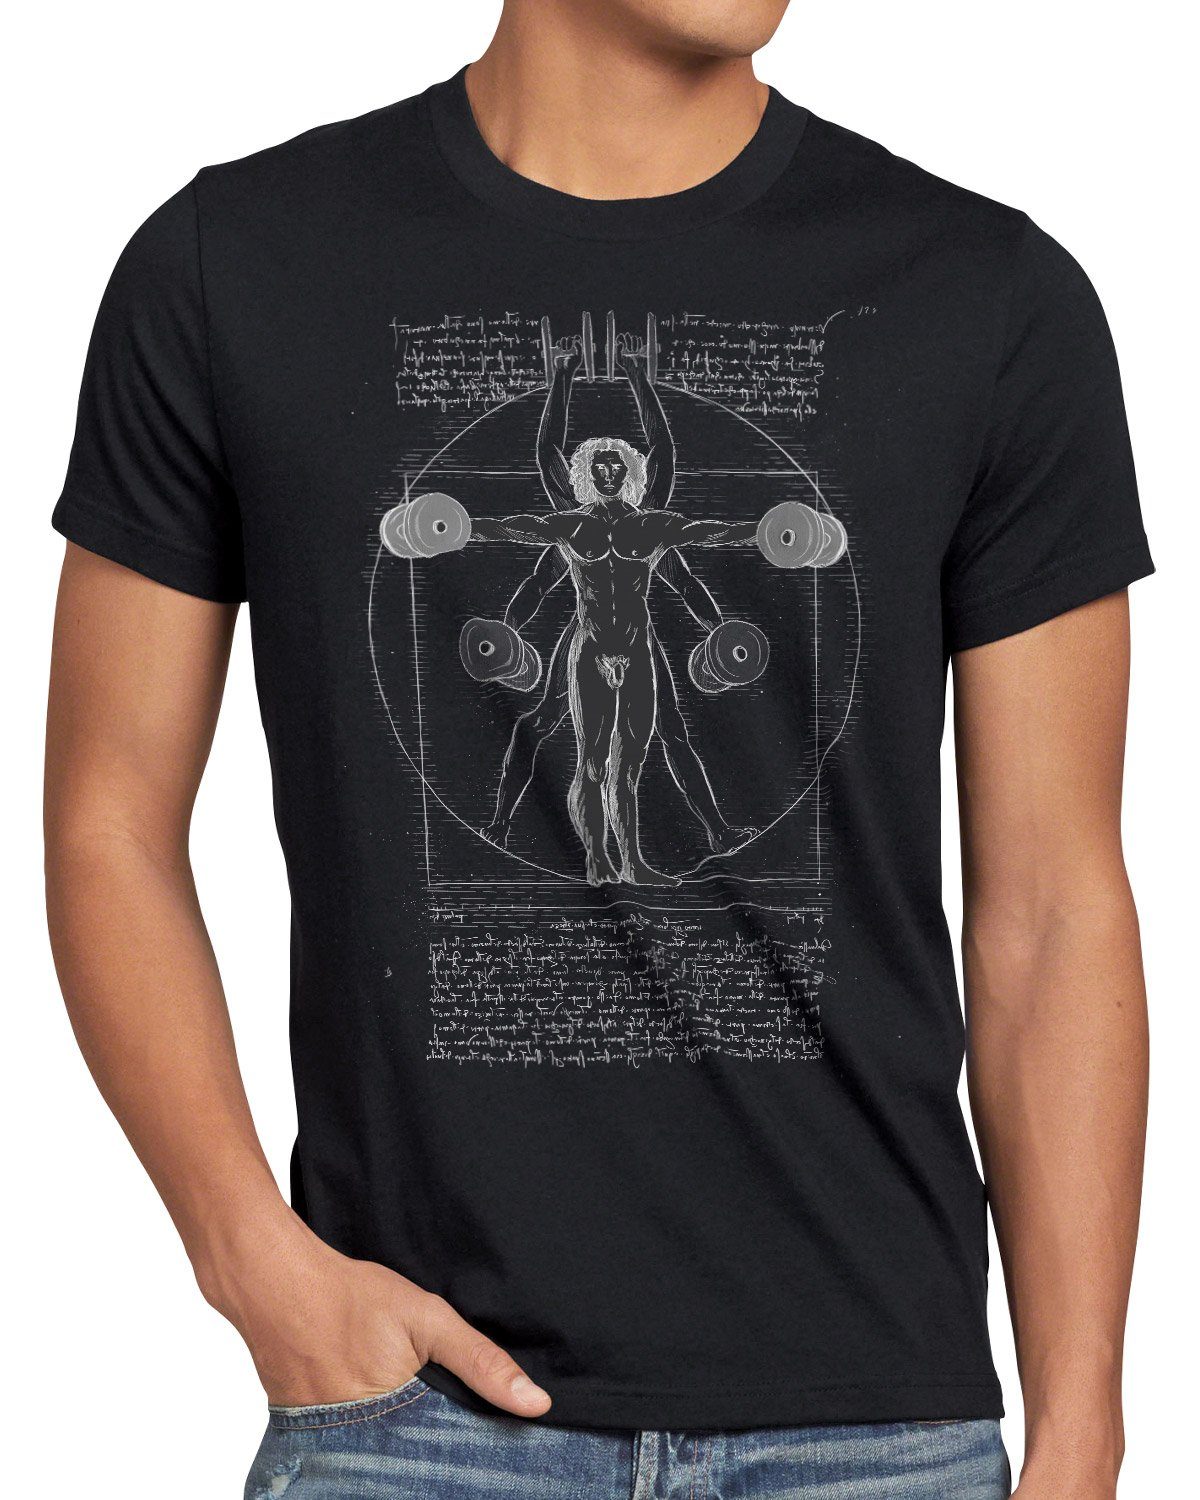 style3 Print-Shirt Herren T-Shirt Vitruvianischer Mensch mit Kurzhantel butterfly rudern training schwarz